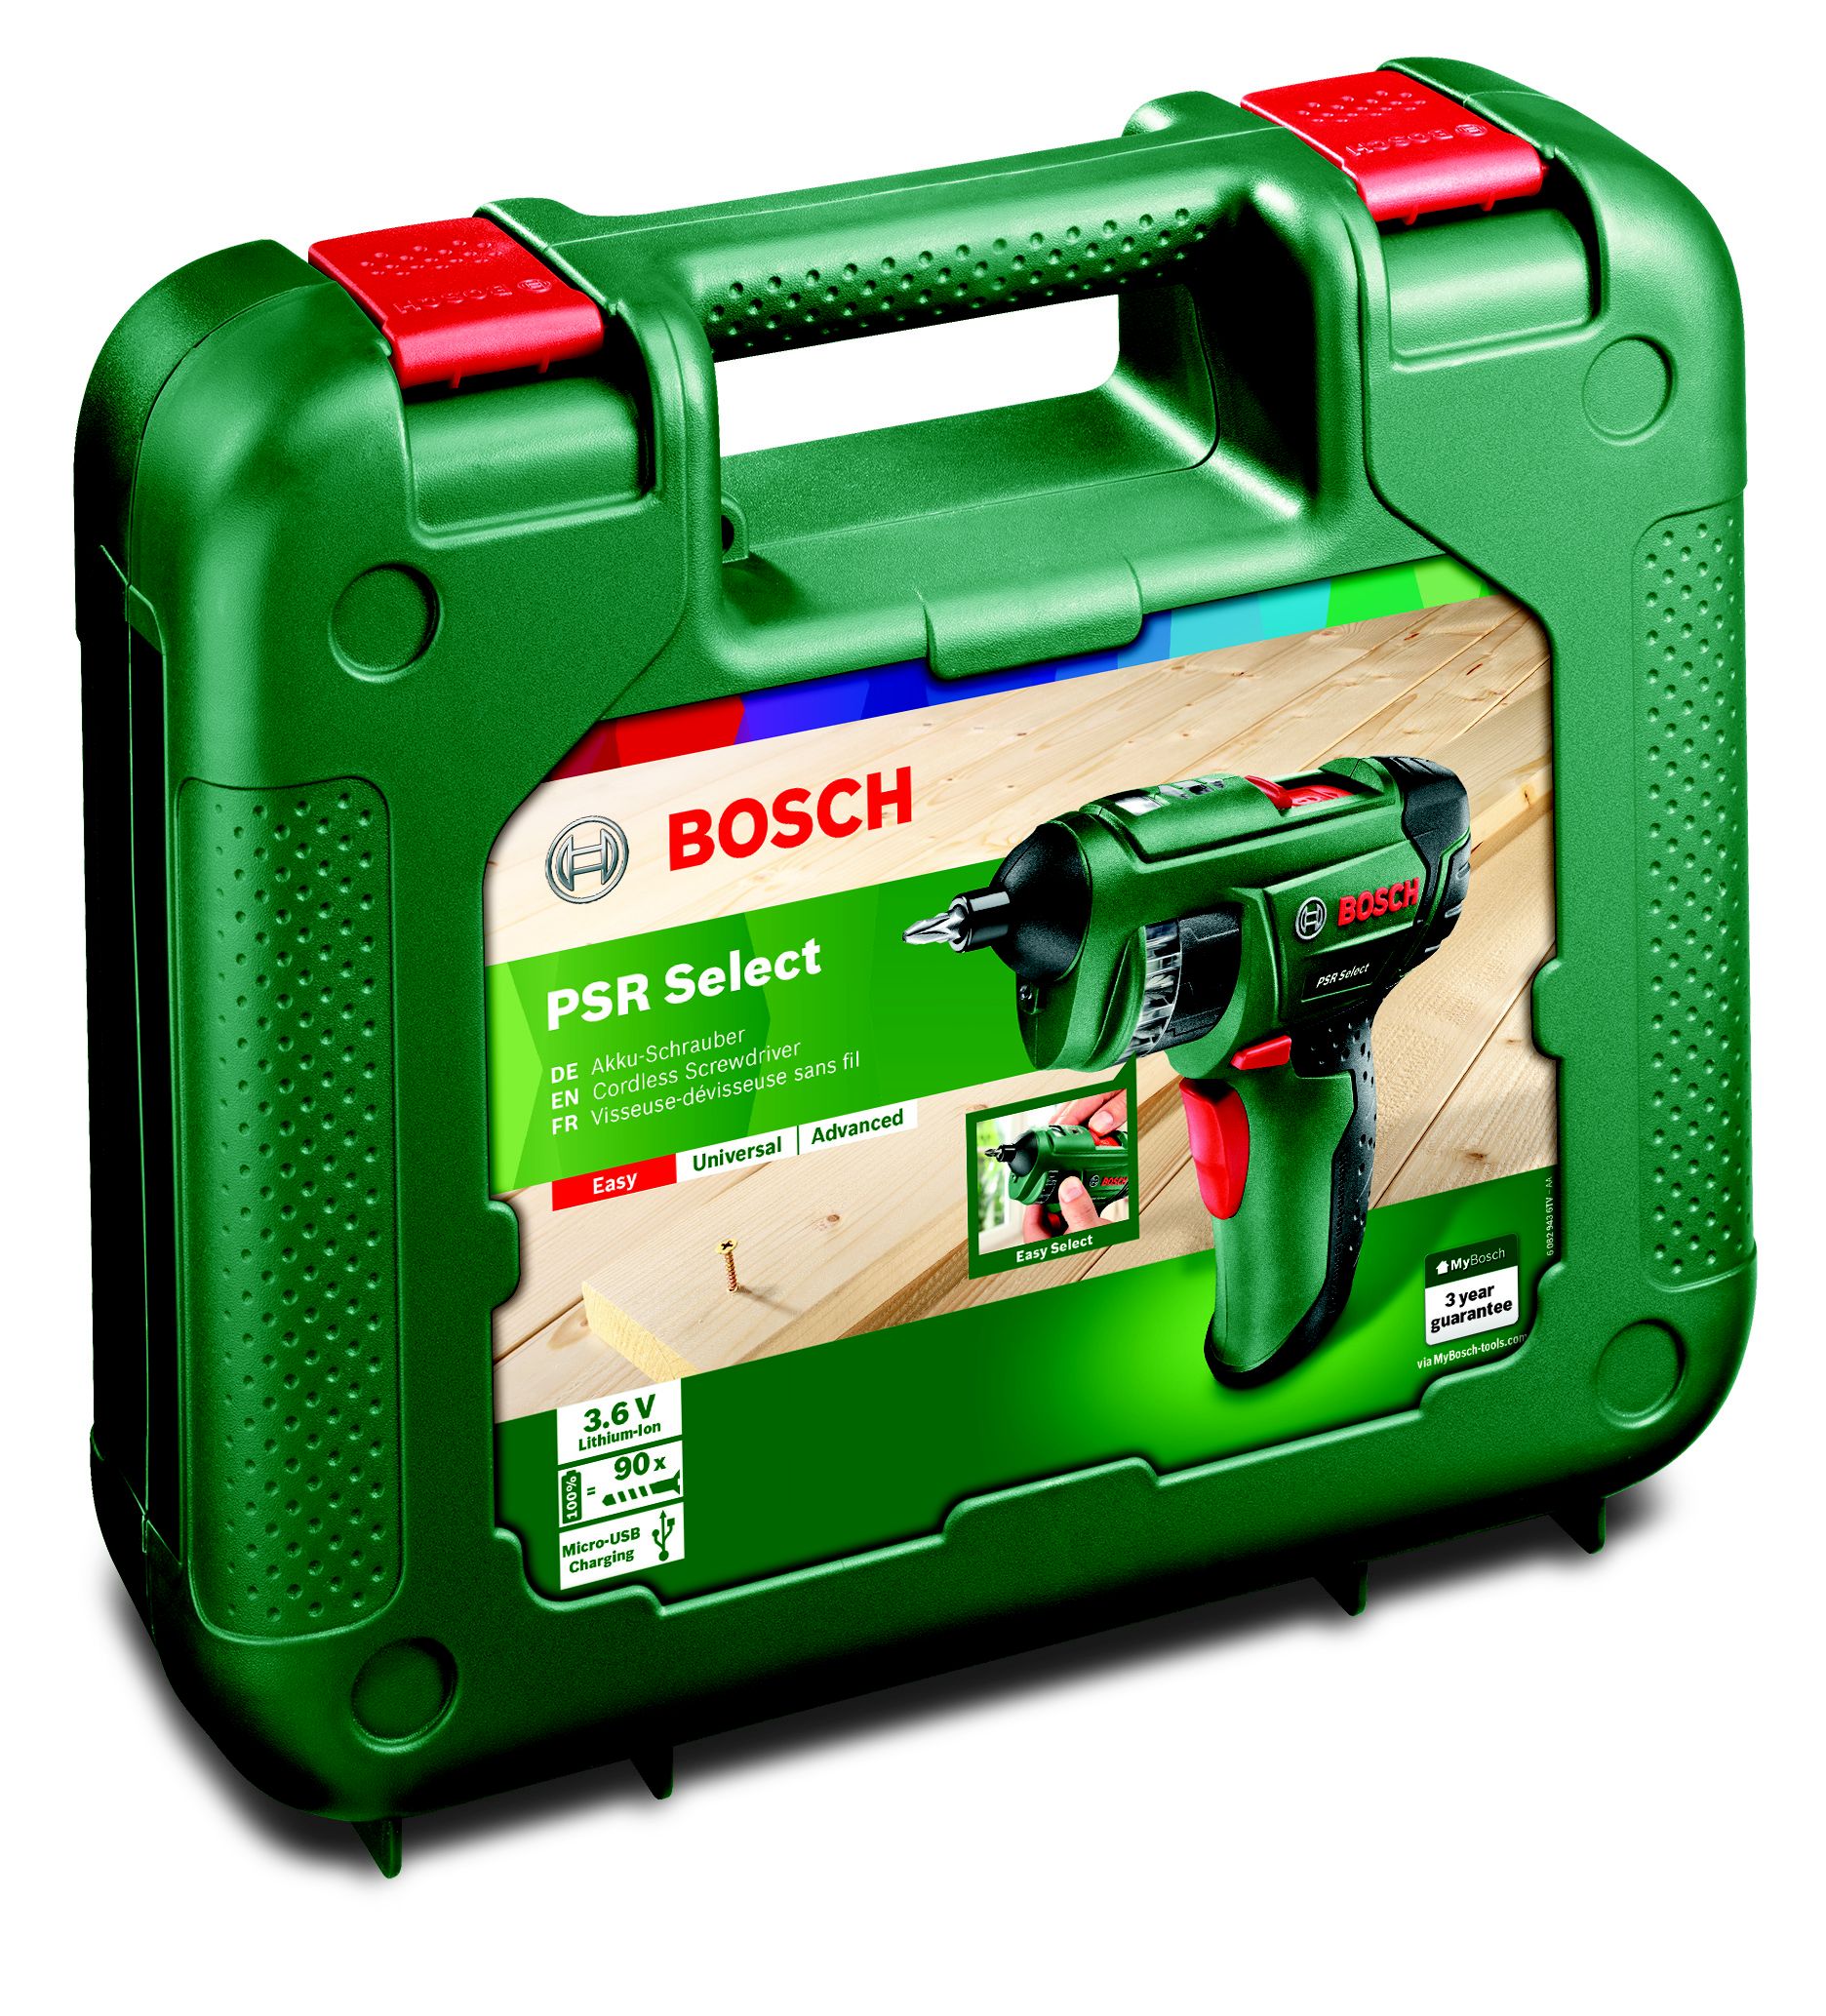 Bosch PSR Select 3.6V 1.5 Li-ion Cordless Screwdriver